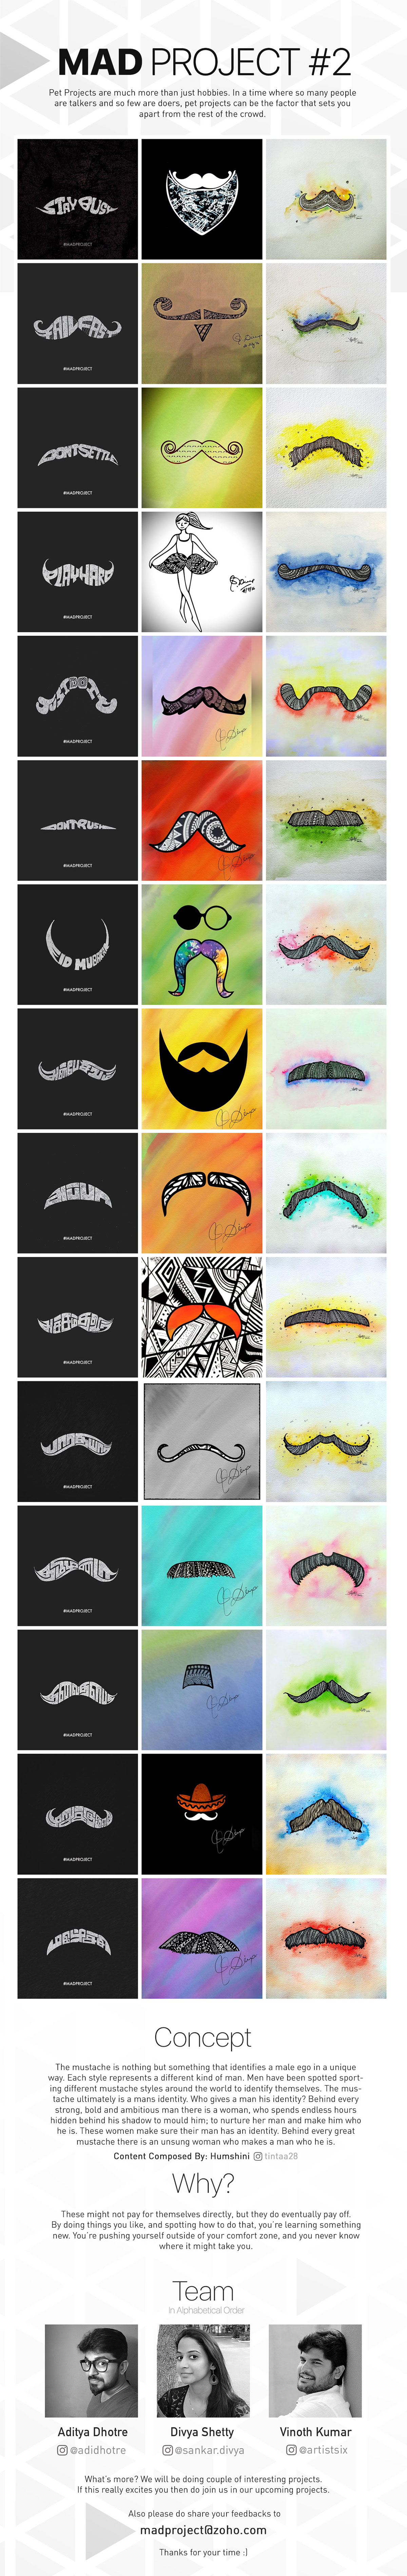 madproject FunProject mustache moustache instagram madrasters design heartist adidhotre artistsix